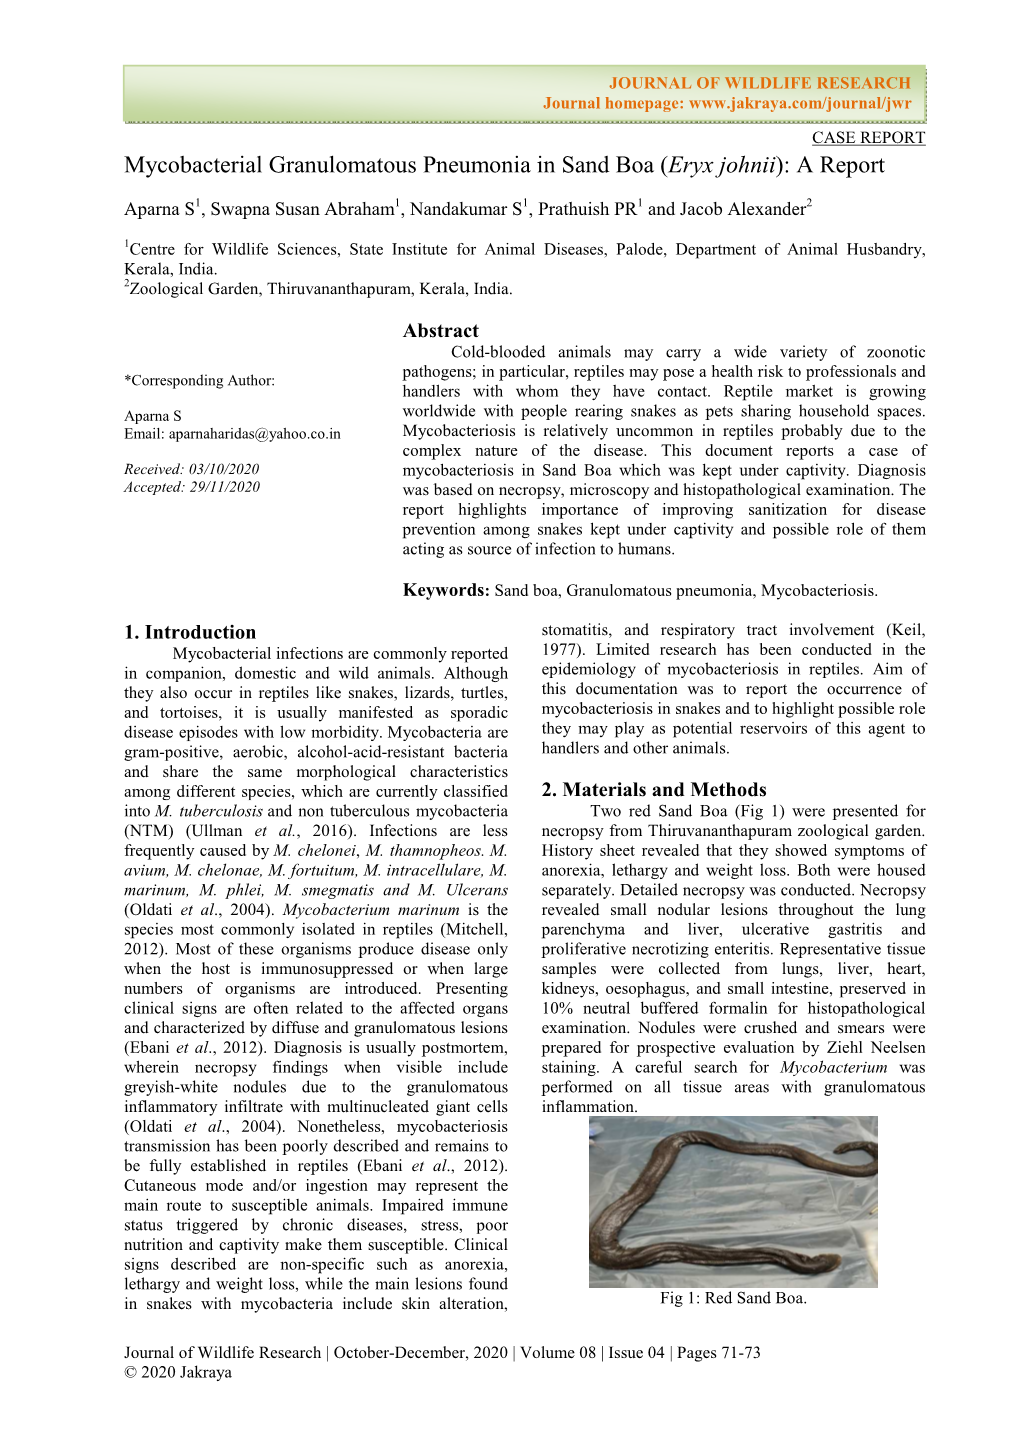 Mycobacterial Granulomatous Pneumonia in Sand Boa (Eryx Johnii): a Report